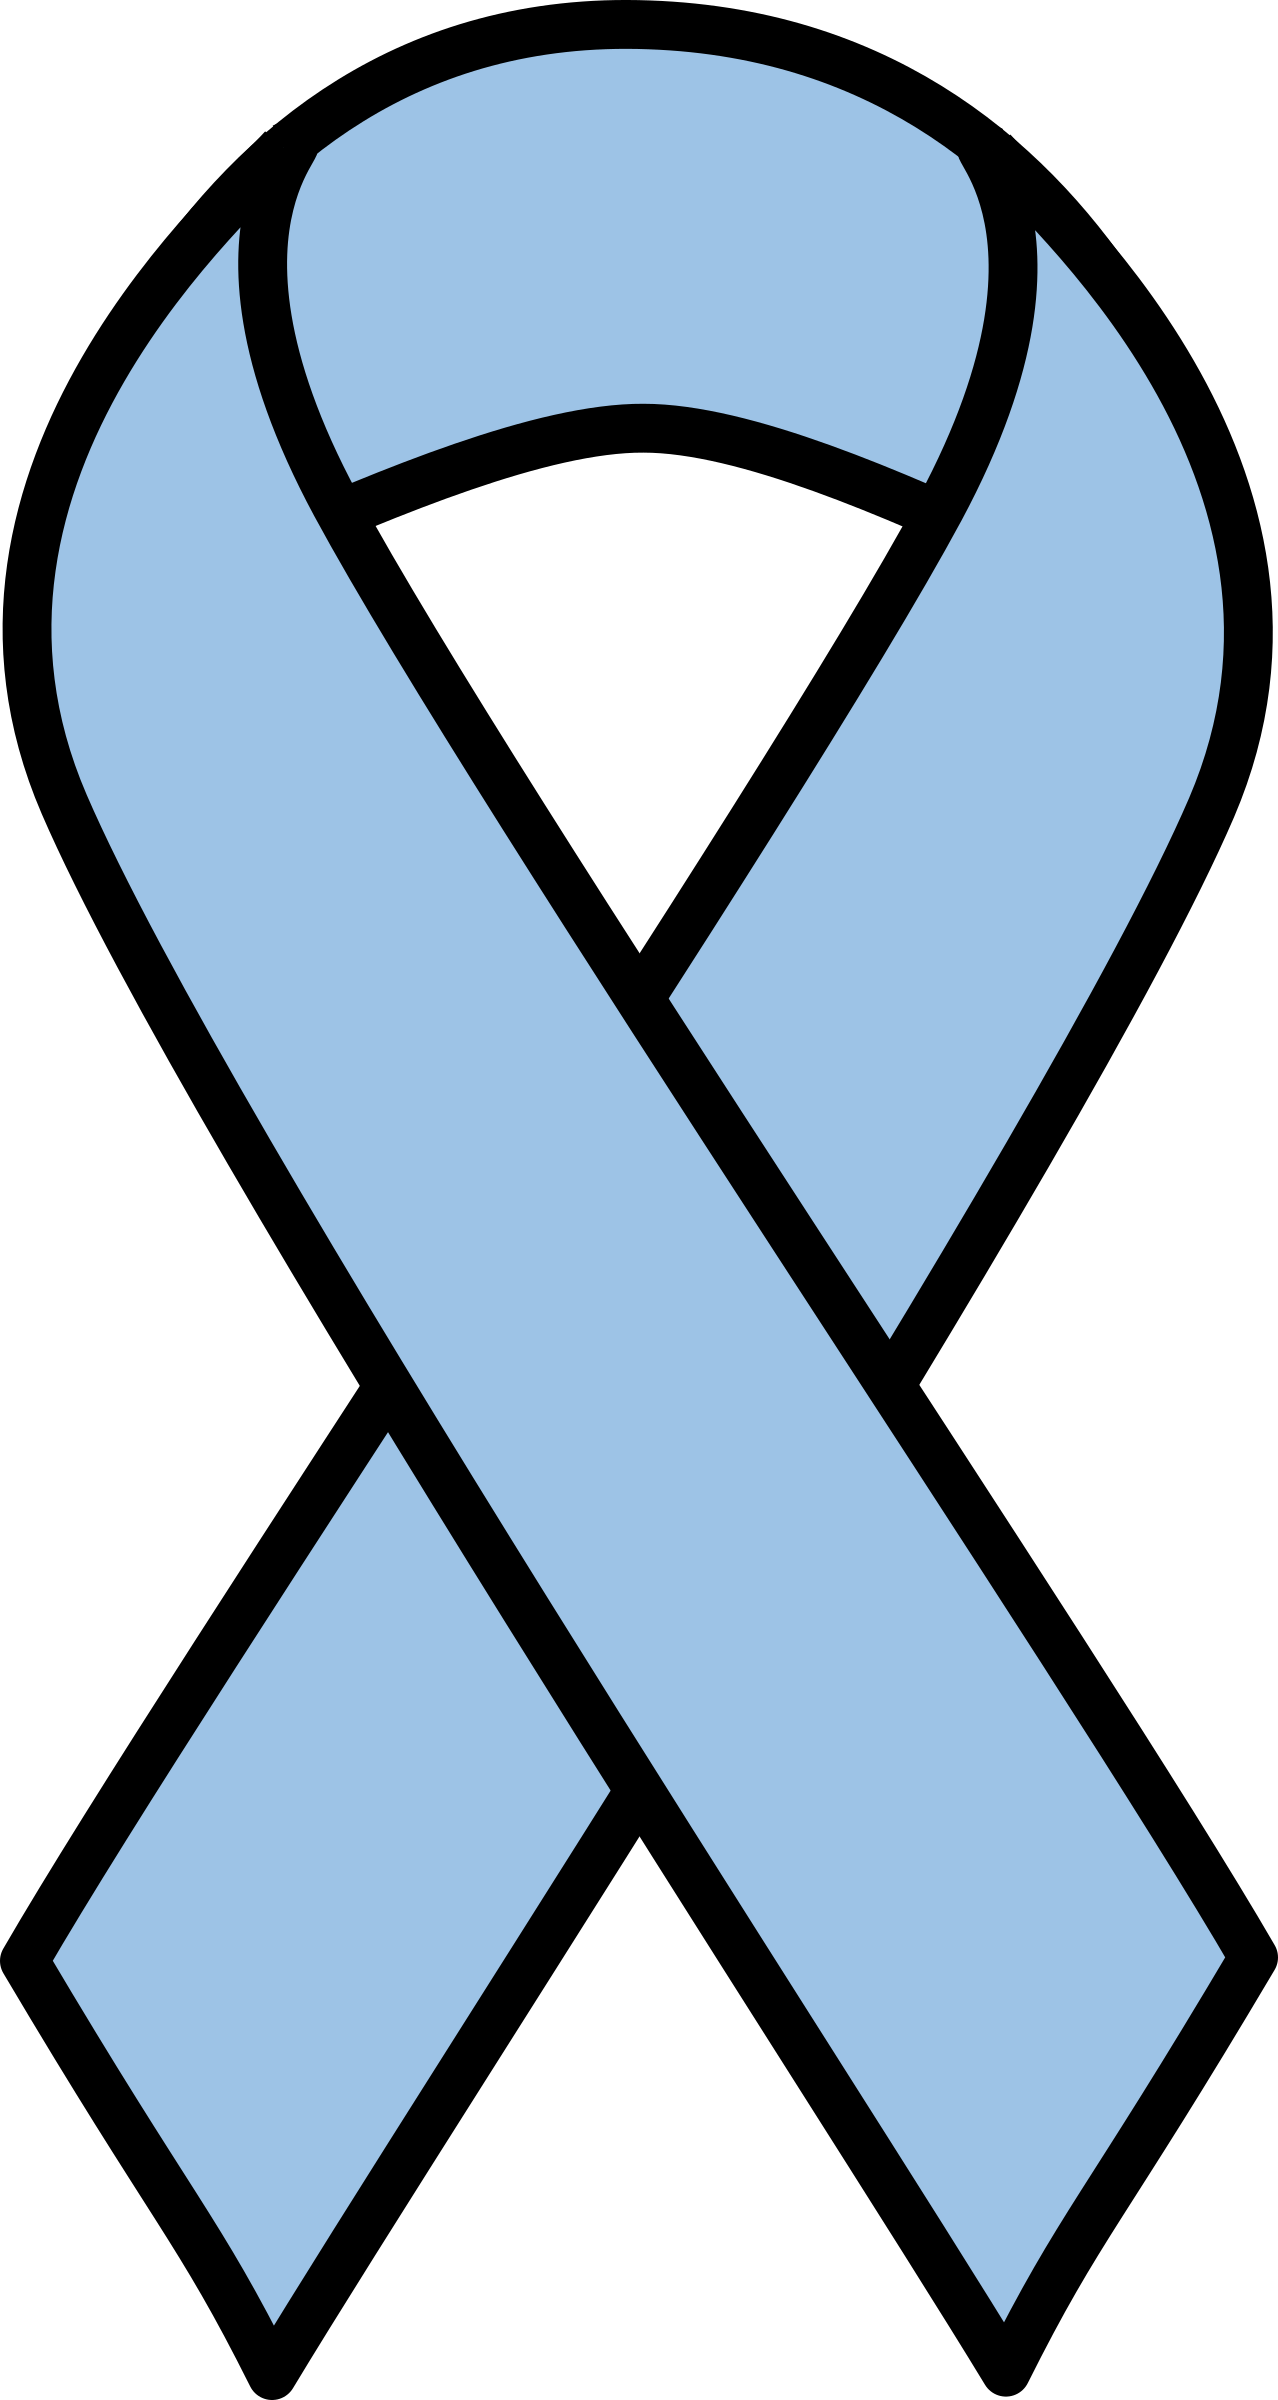 Big Image - Light Blue Cancer Ribbon (1278x2400)